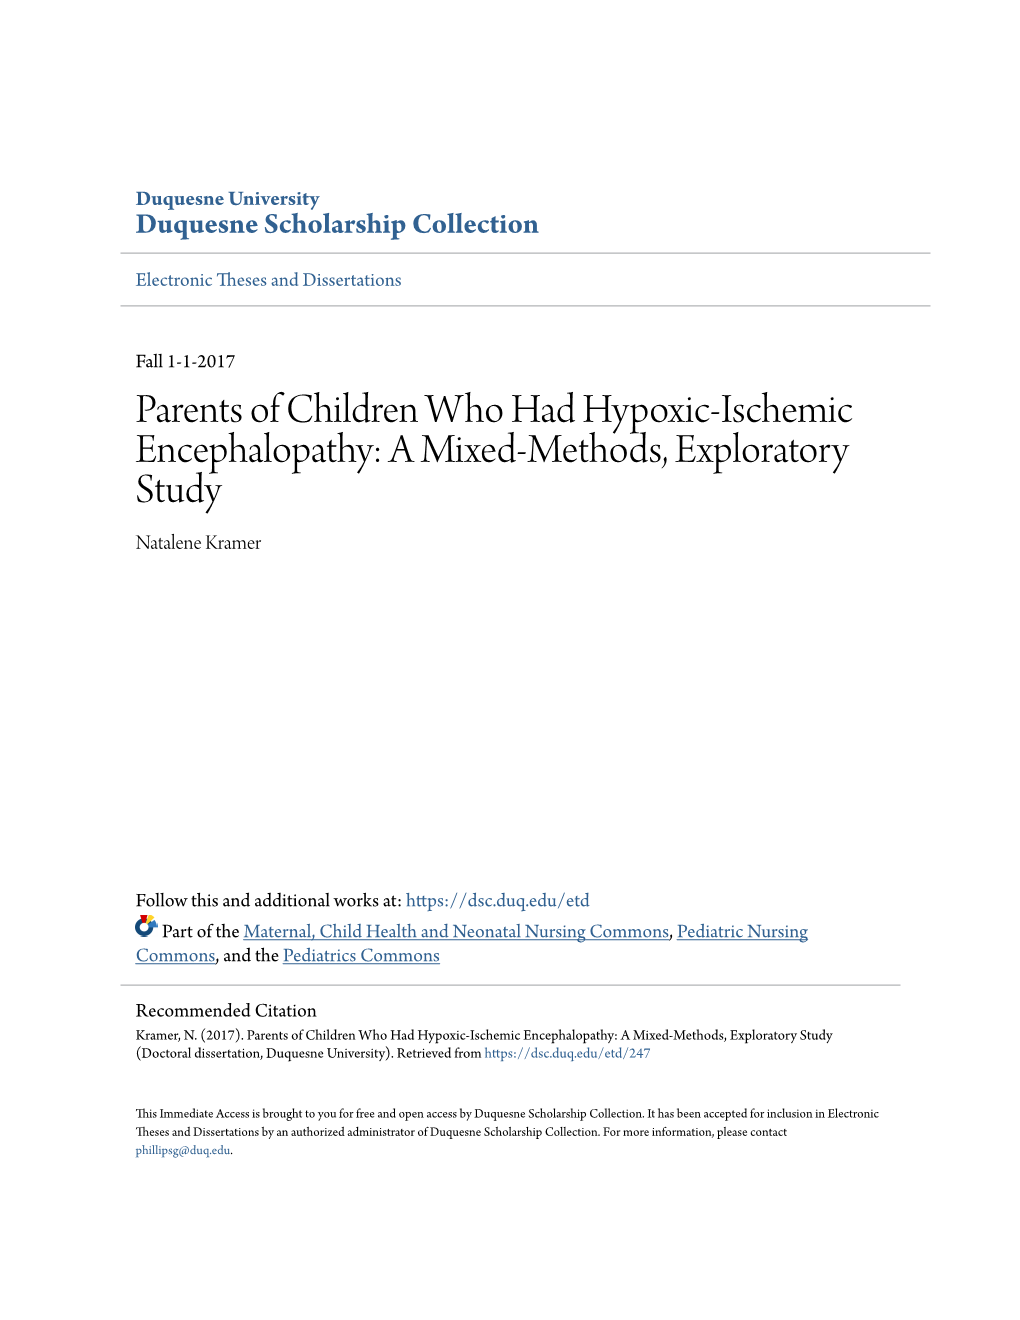 Parents of Children Who Had Hypoxic-Ischemic Encephalopathy: a Mixed-Methods, Exploratory Study Natalene Kramer